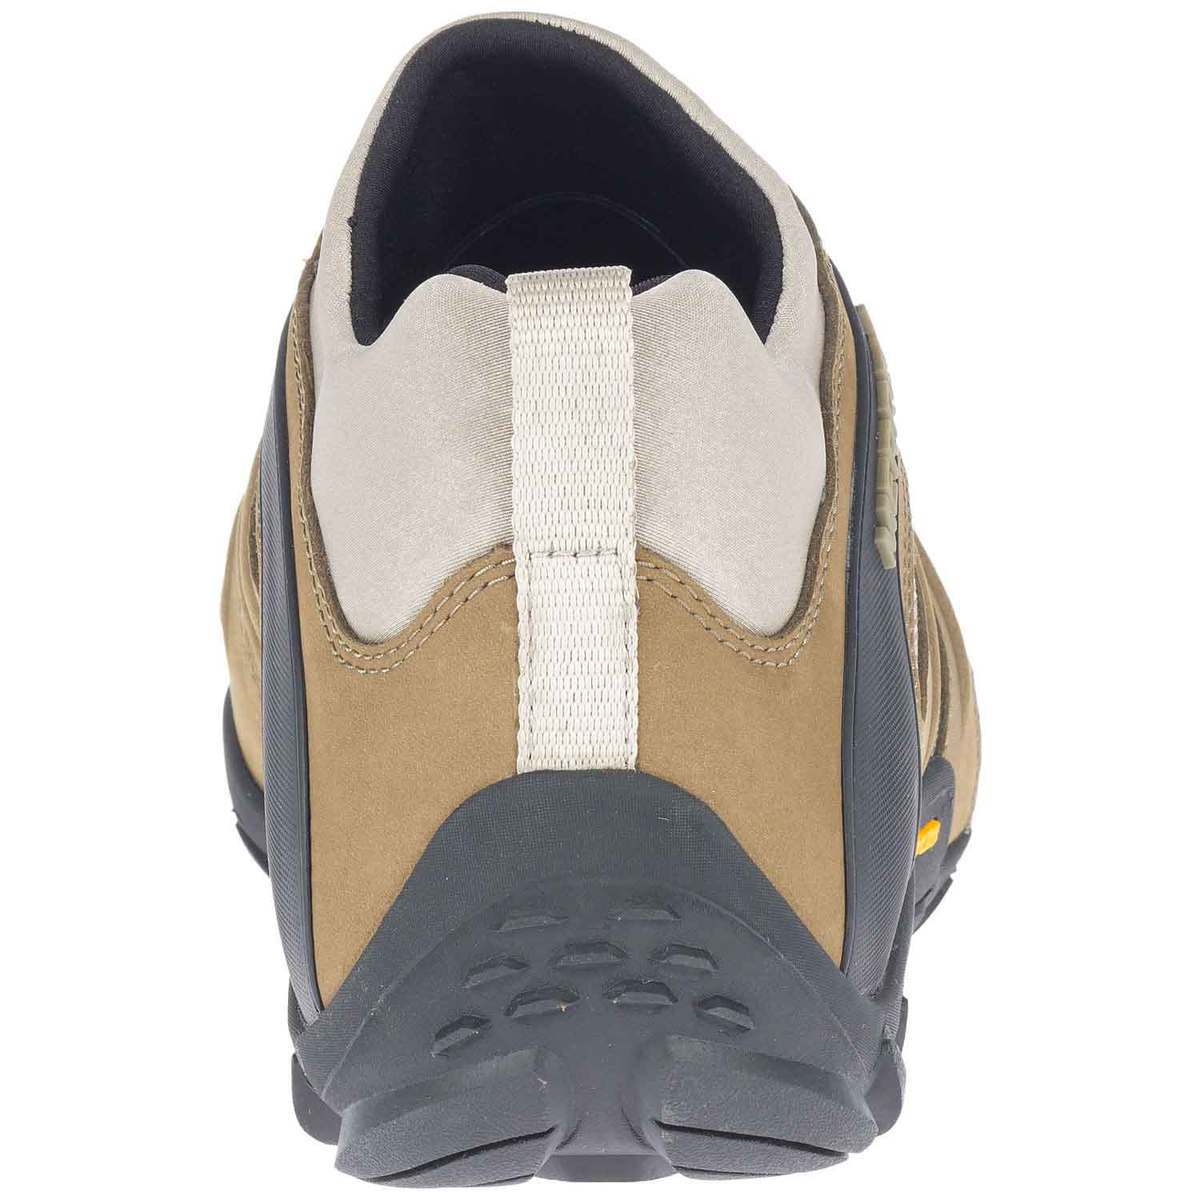 Merrell Men's Chameleon 8 Low Hiking Shoes - Kangaroo - Size 9.5 ...